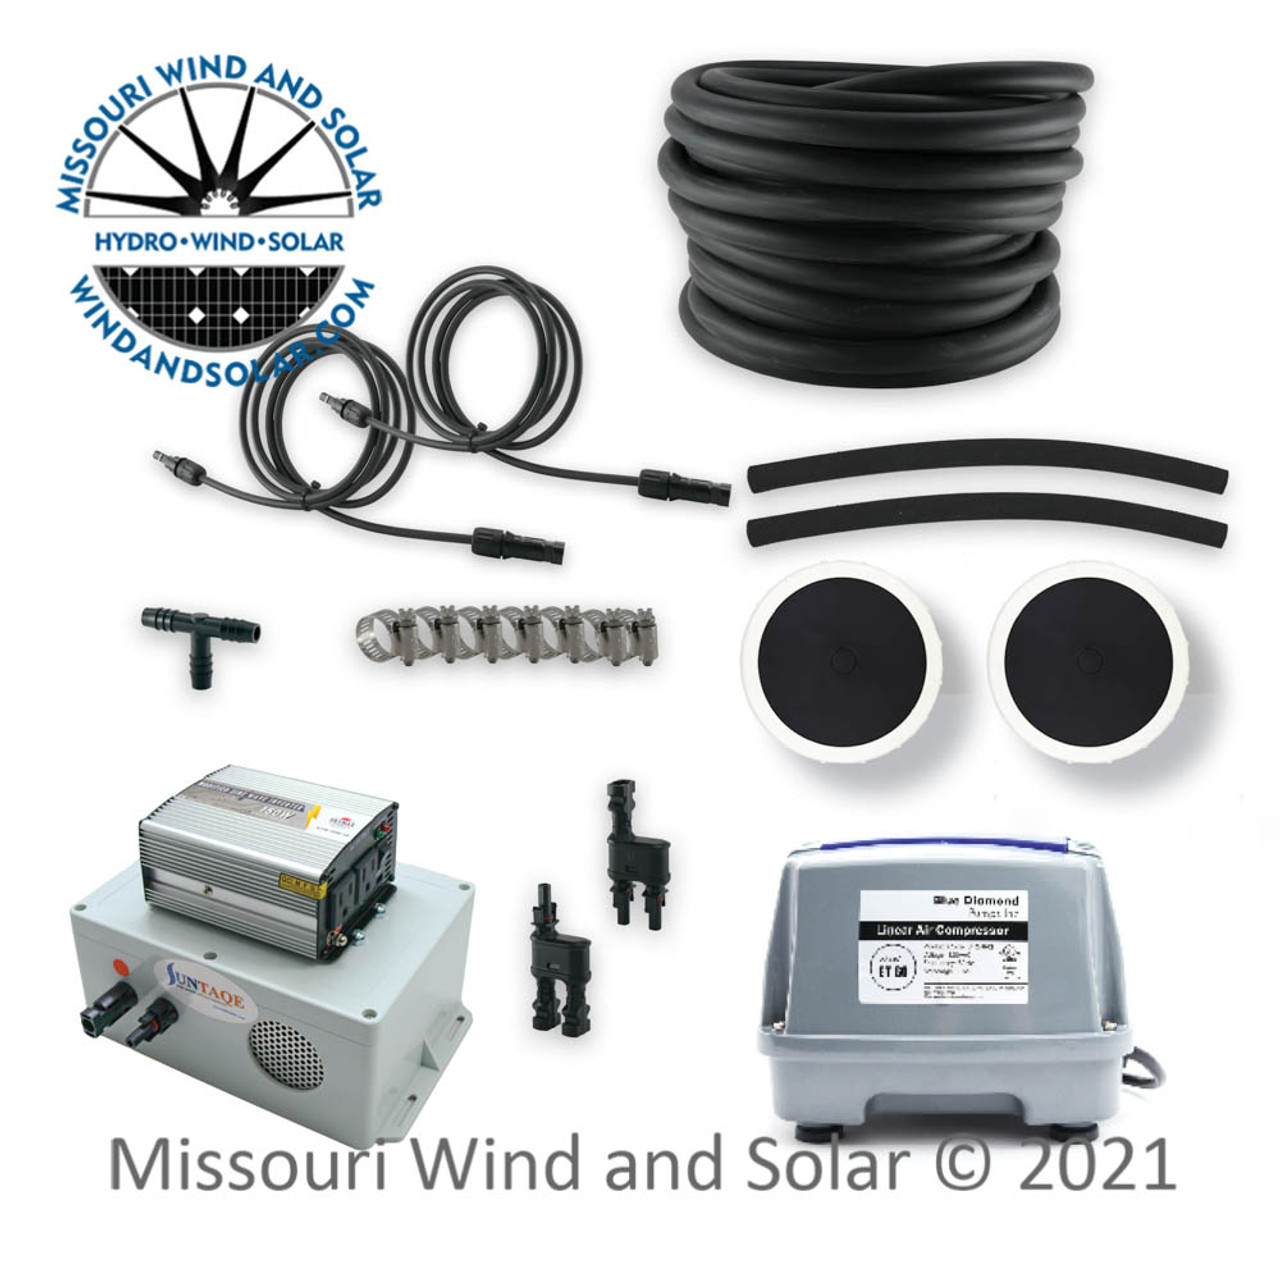 Missouri Wind and Solar